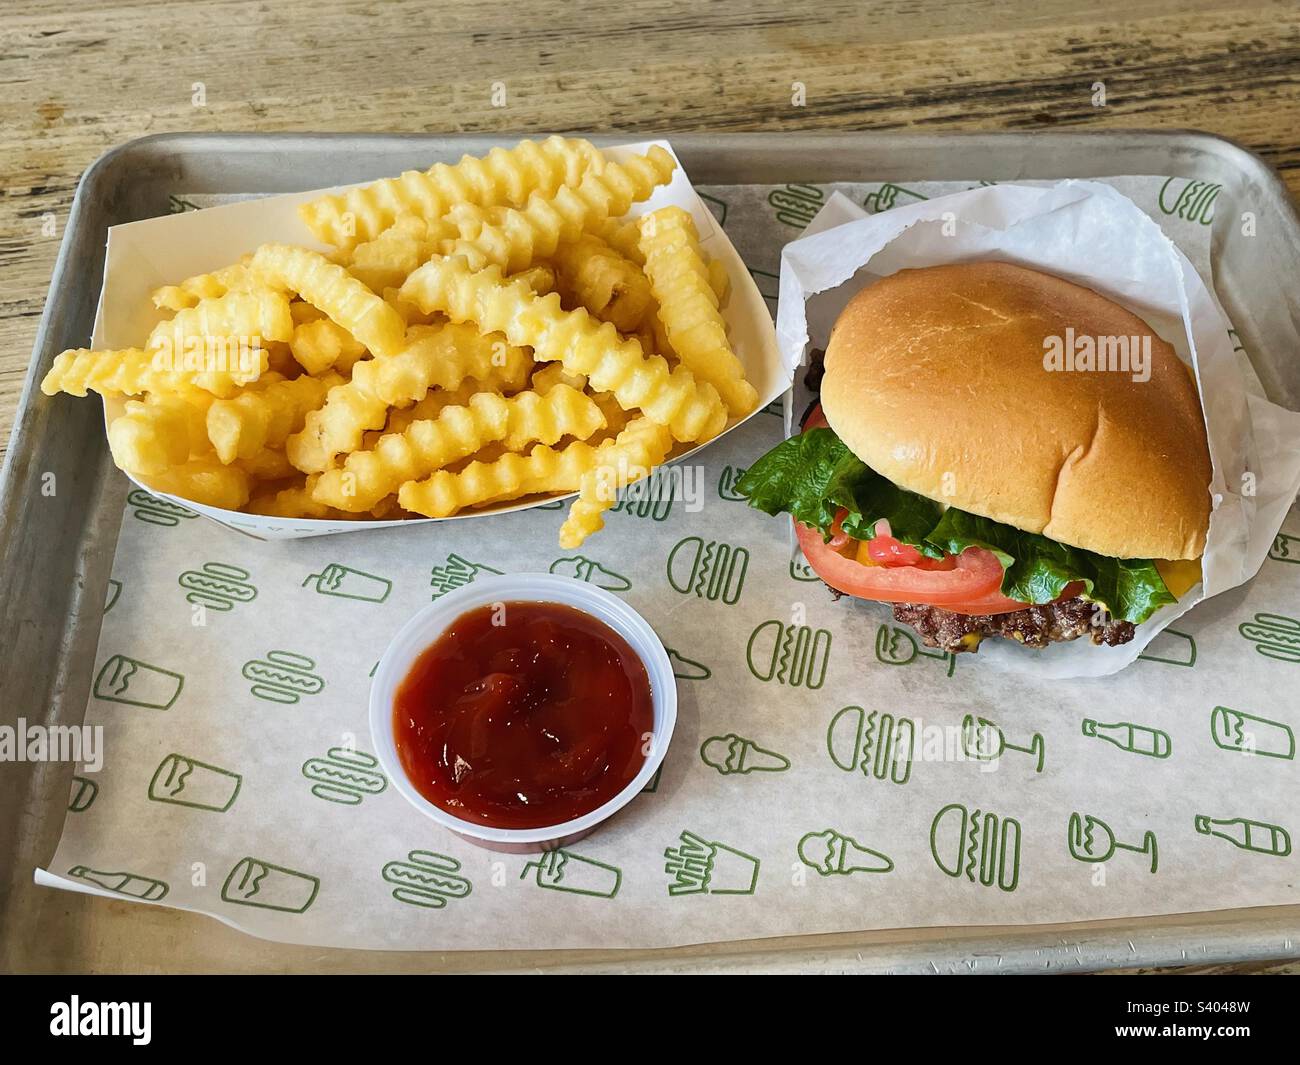 Shake, shack, cheeseburger, and fries Stock Photo